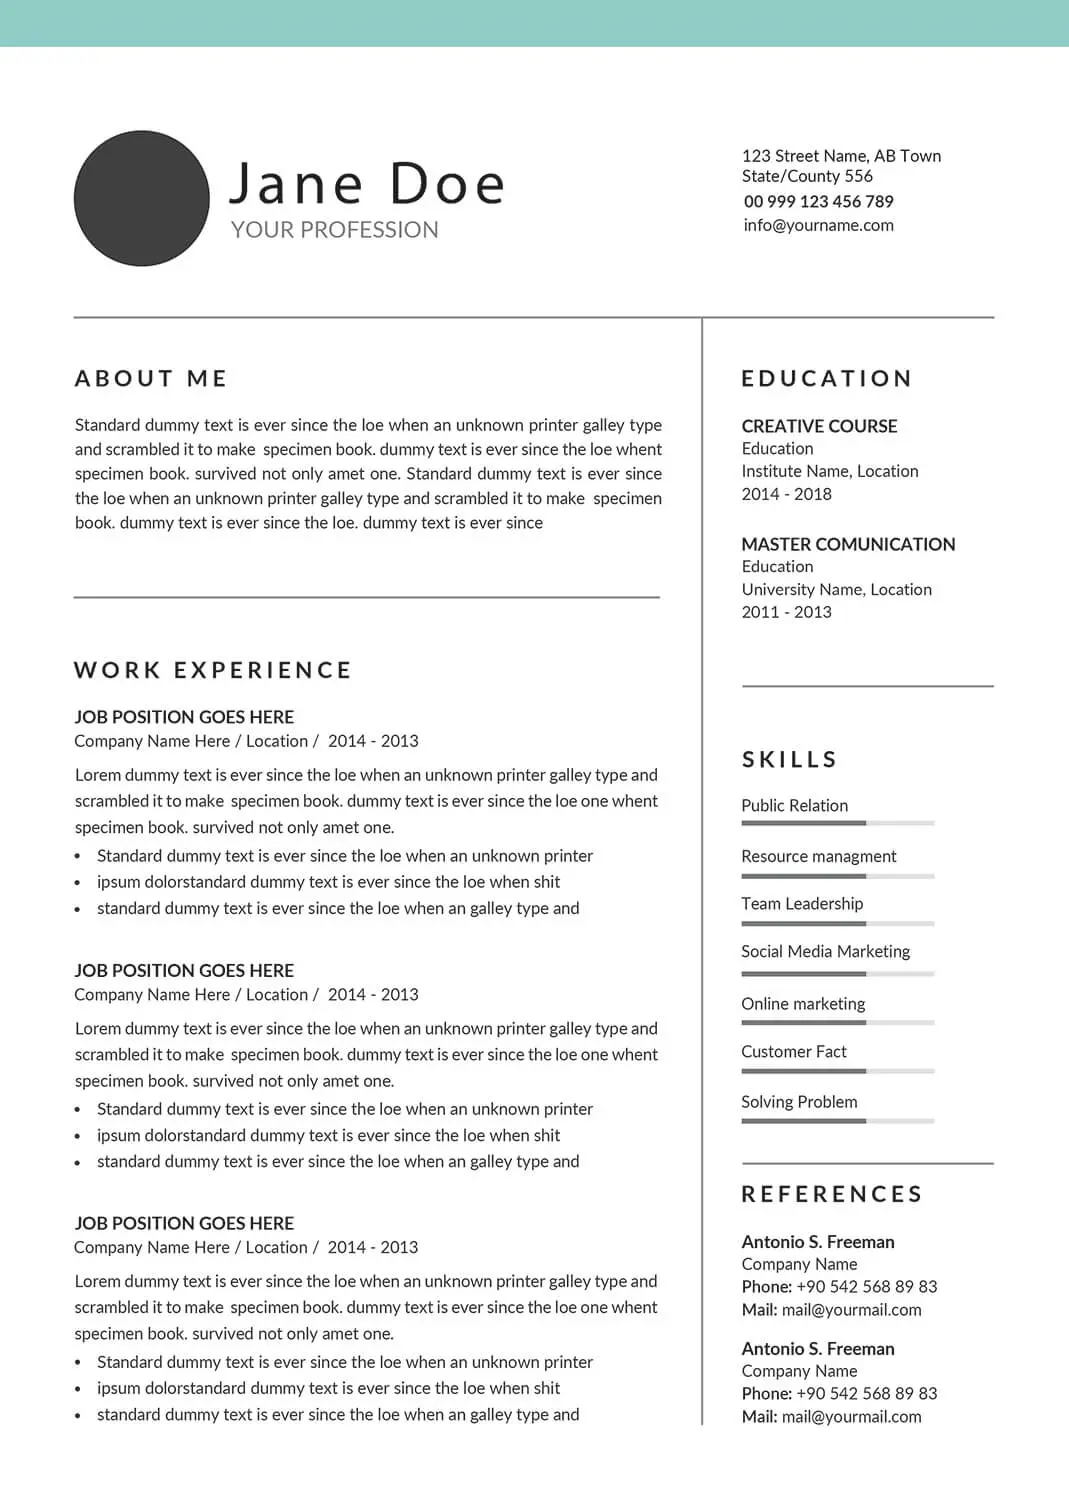 finance-director-resume